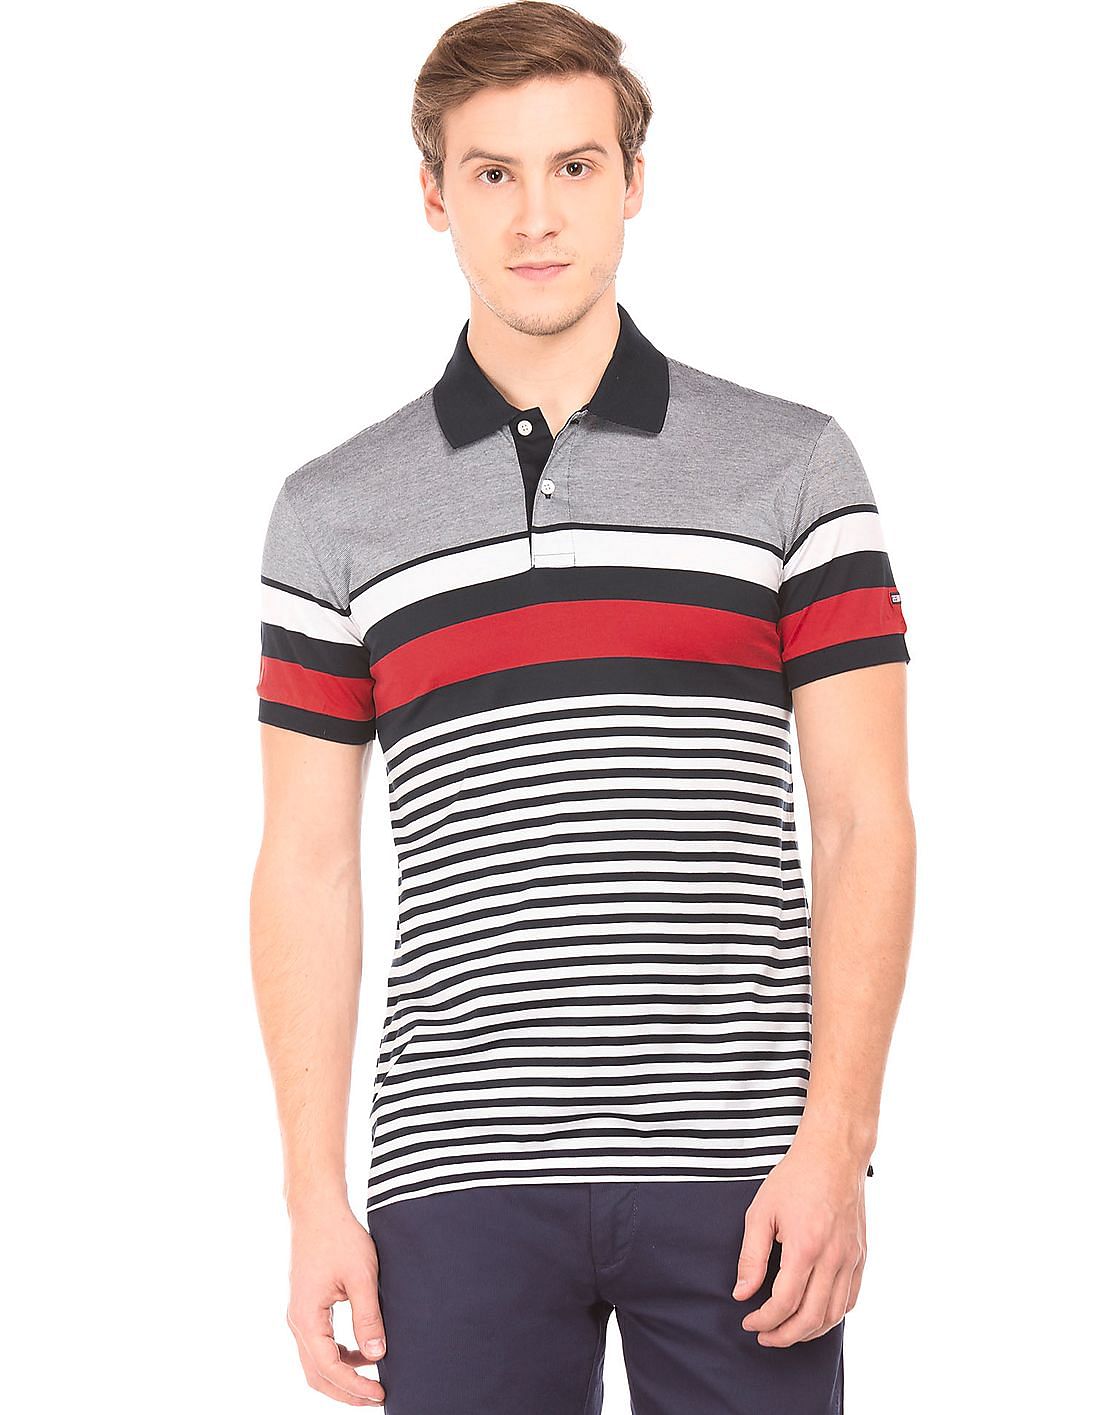 Buy Arrow Sports Striped Cotton Polo Shirt - NNNOW.com